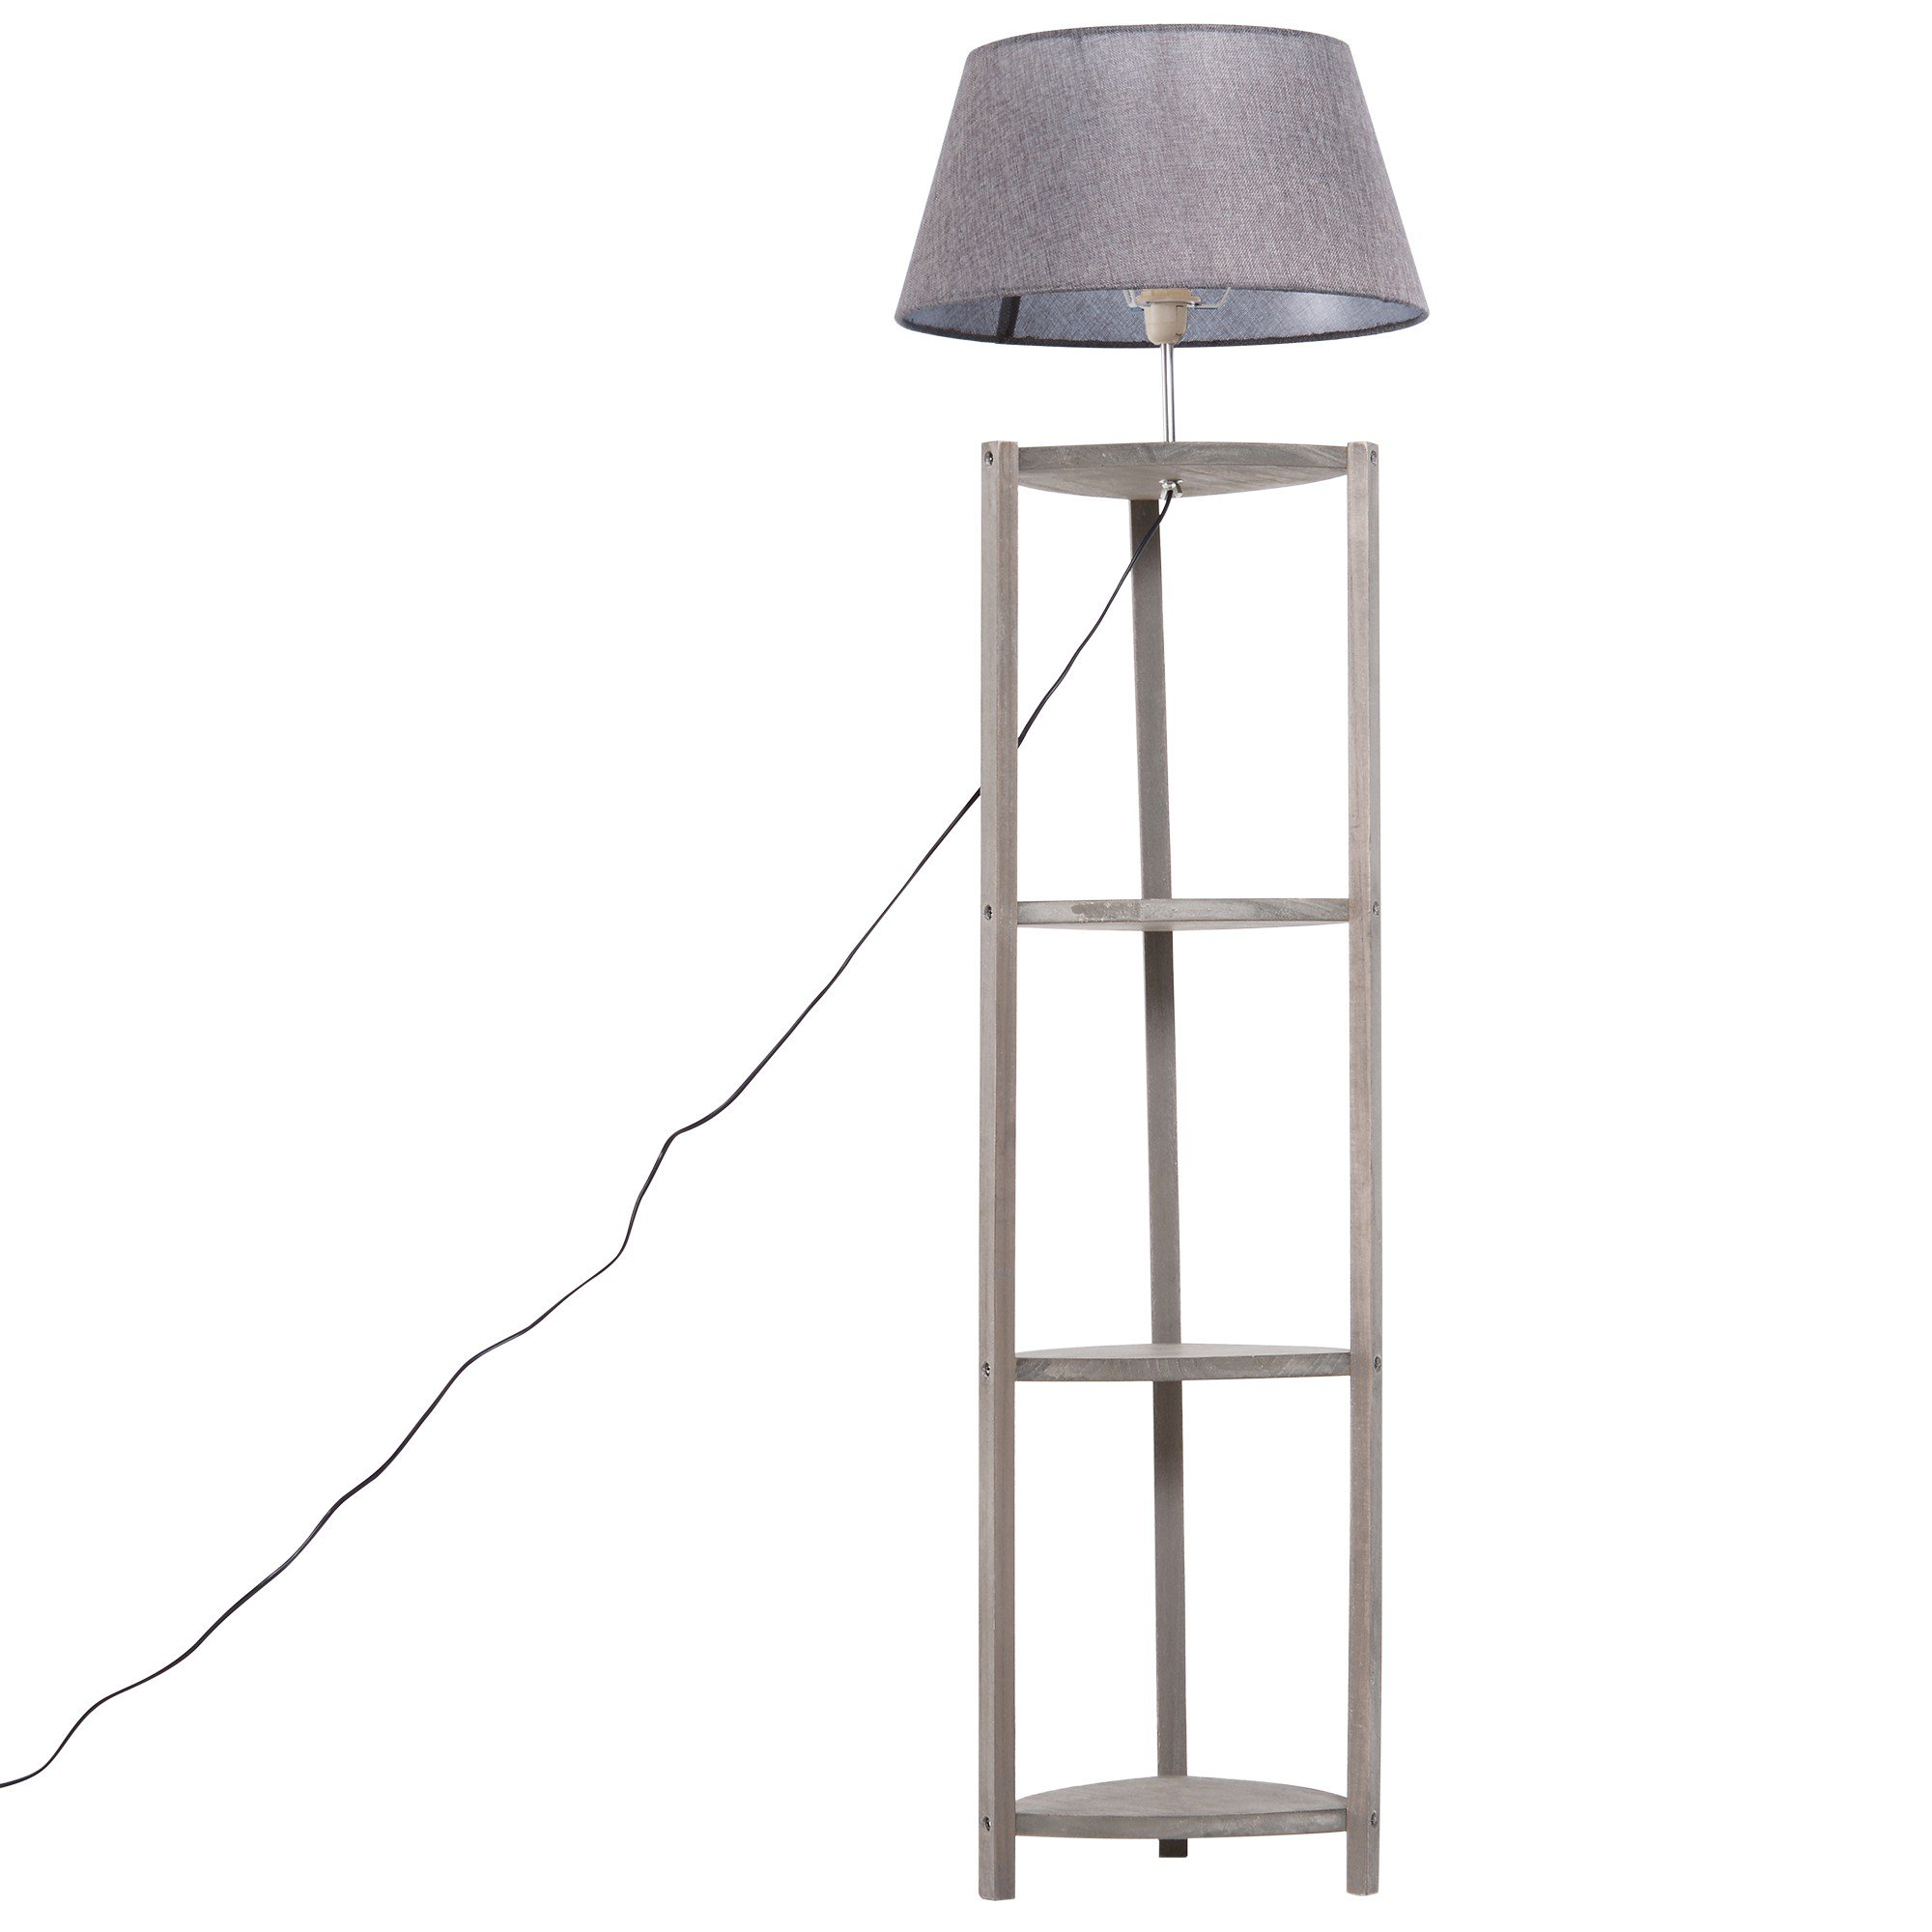 Homcom Free Standing Floor Lamp Bedside Light Wooden Holder Storage Shelf Shade Grey regarding measurements 2000 X 2000